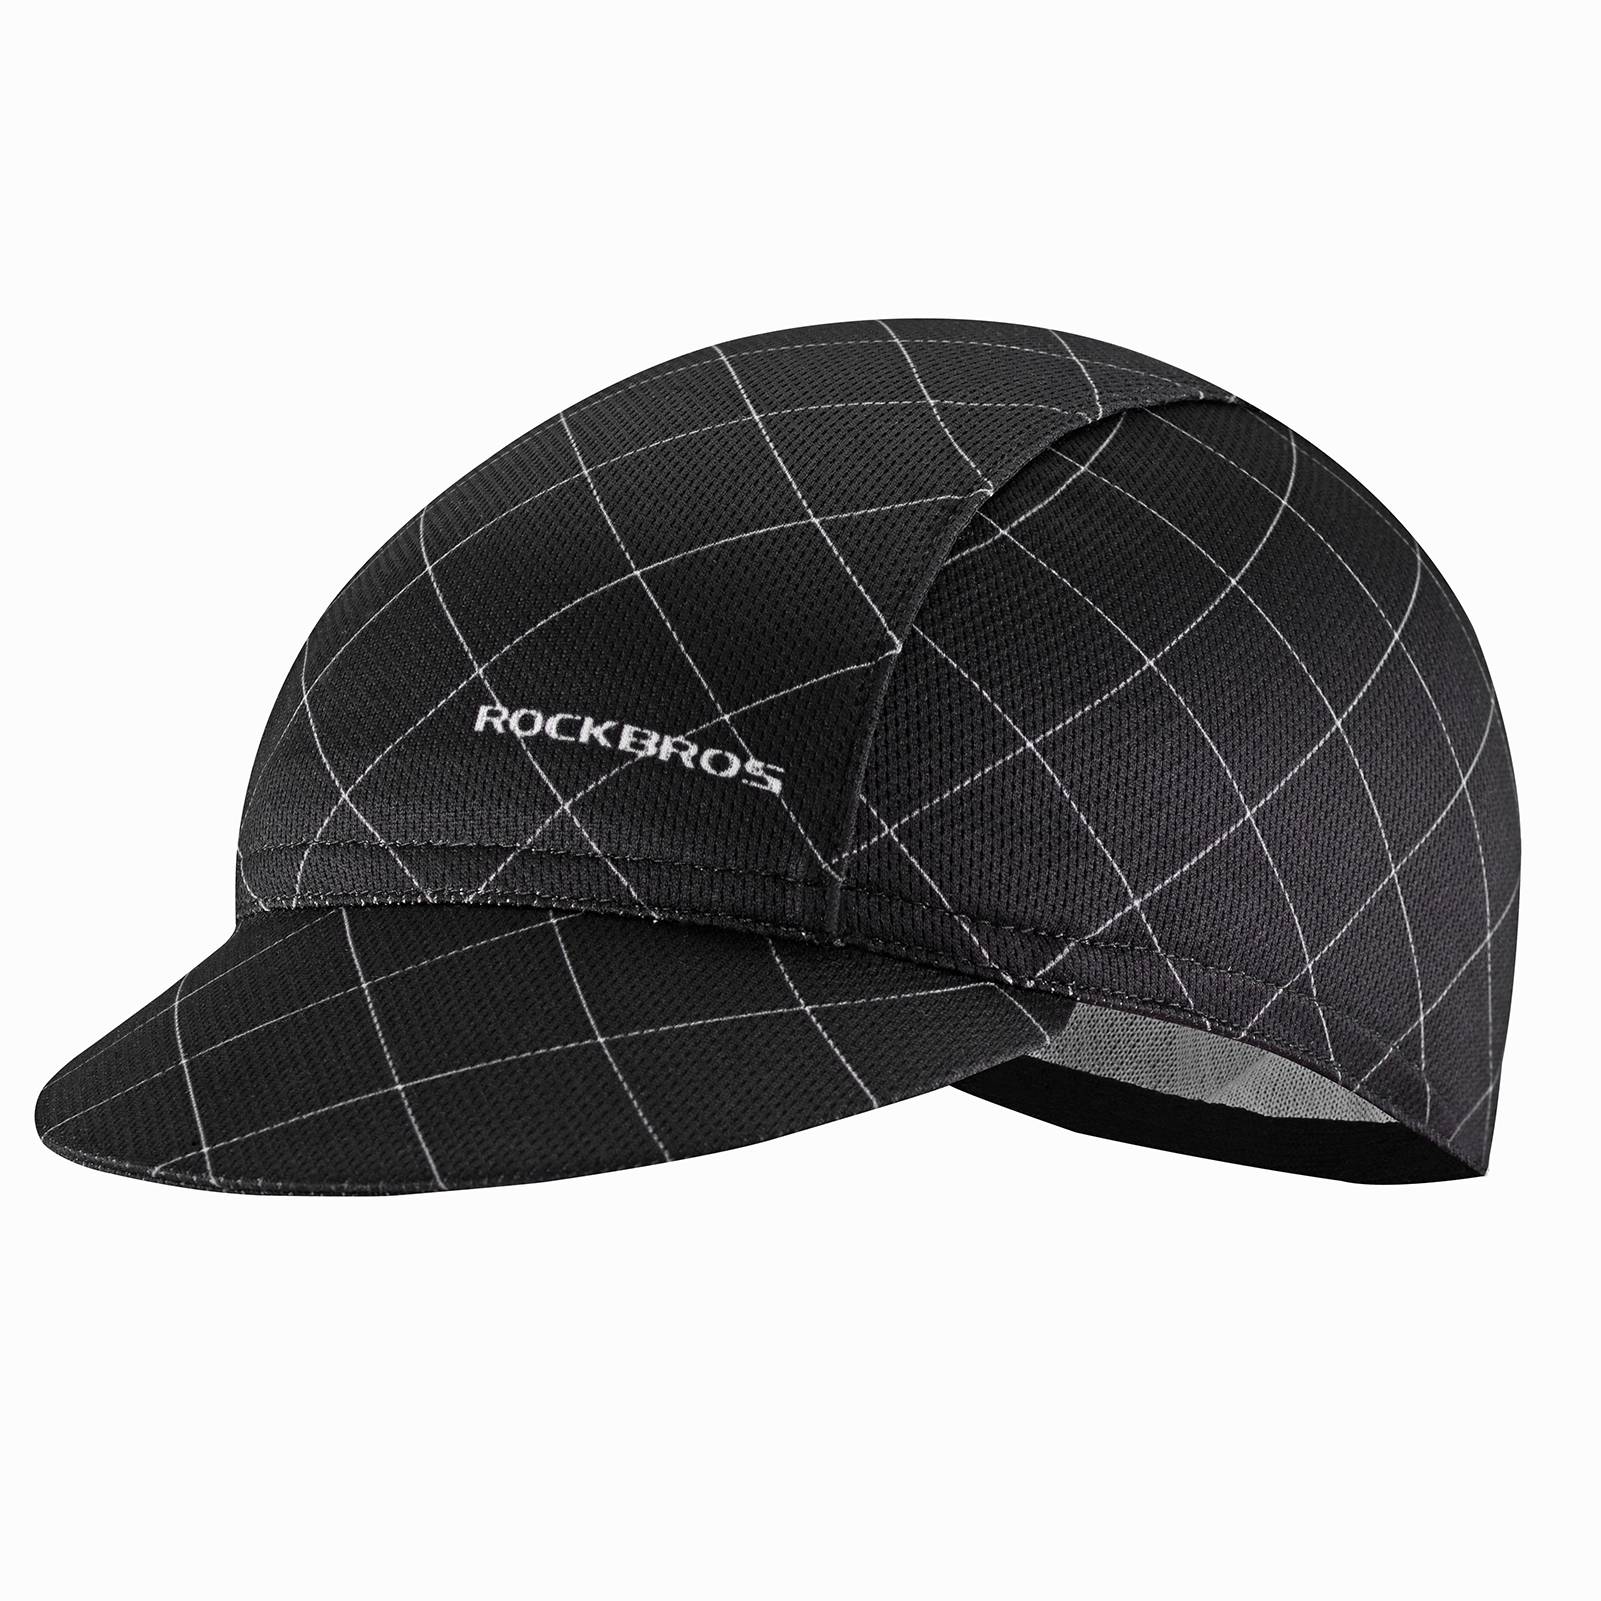 ROCKBROS Cycle Cap Motorcycle Helmet Liner Caps Cycling UV Protection #Color_Black